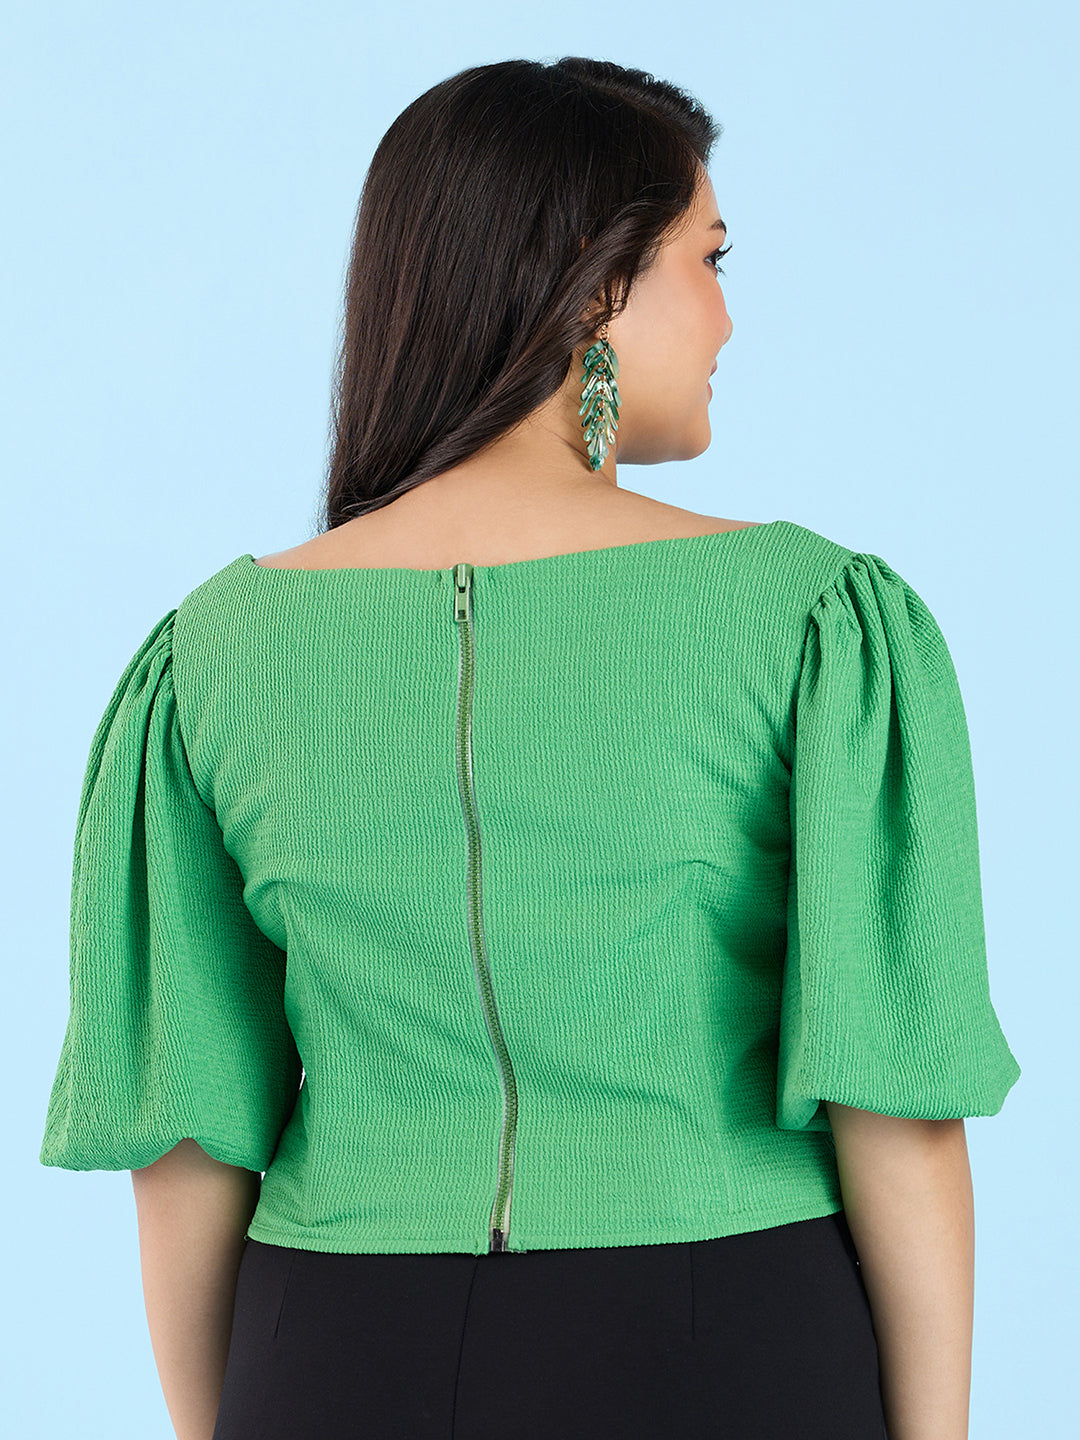 Green Textured Knit Top